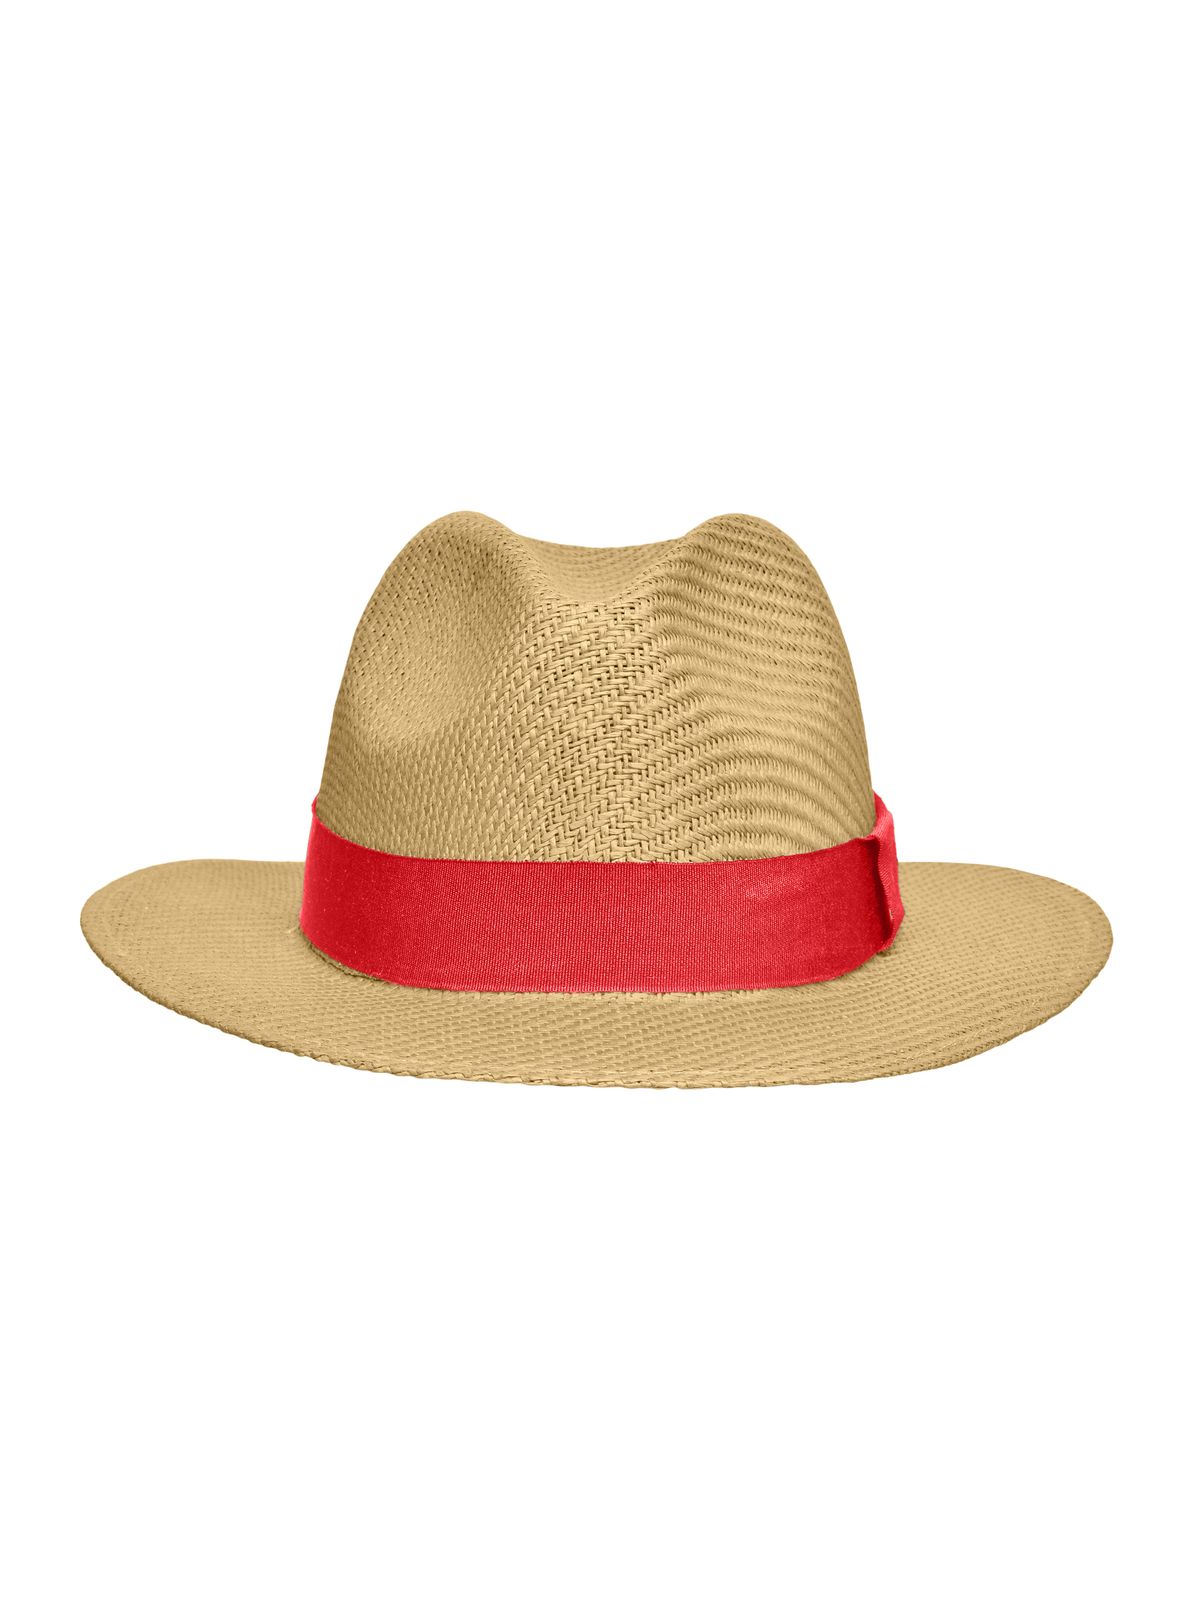 traveller-hat-straw-red.webp